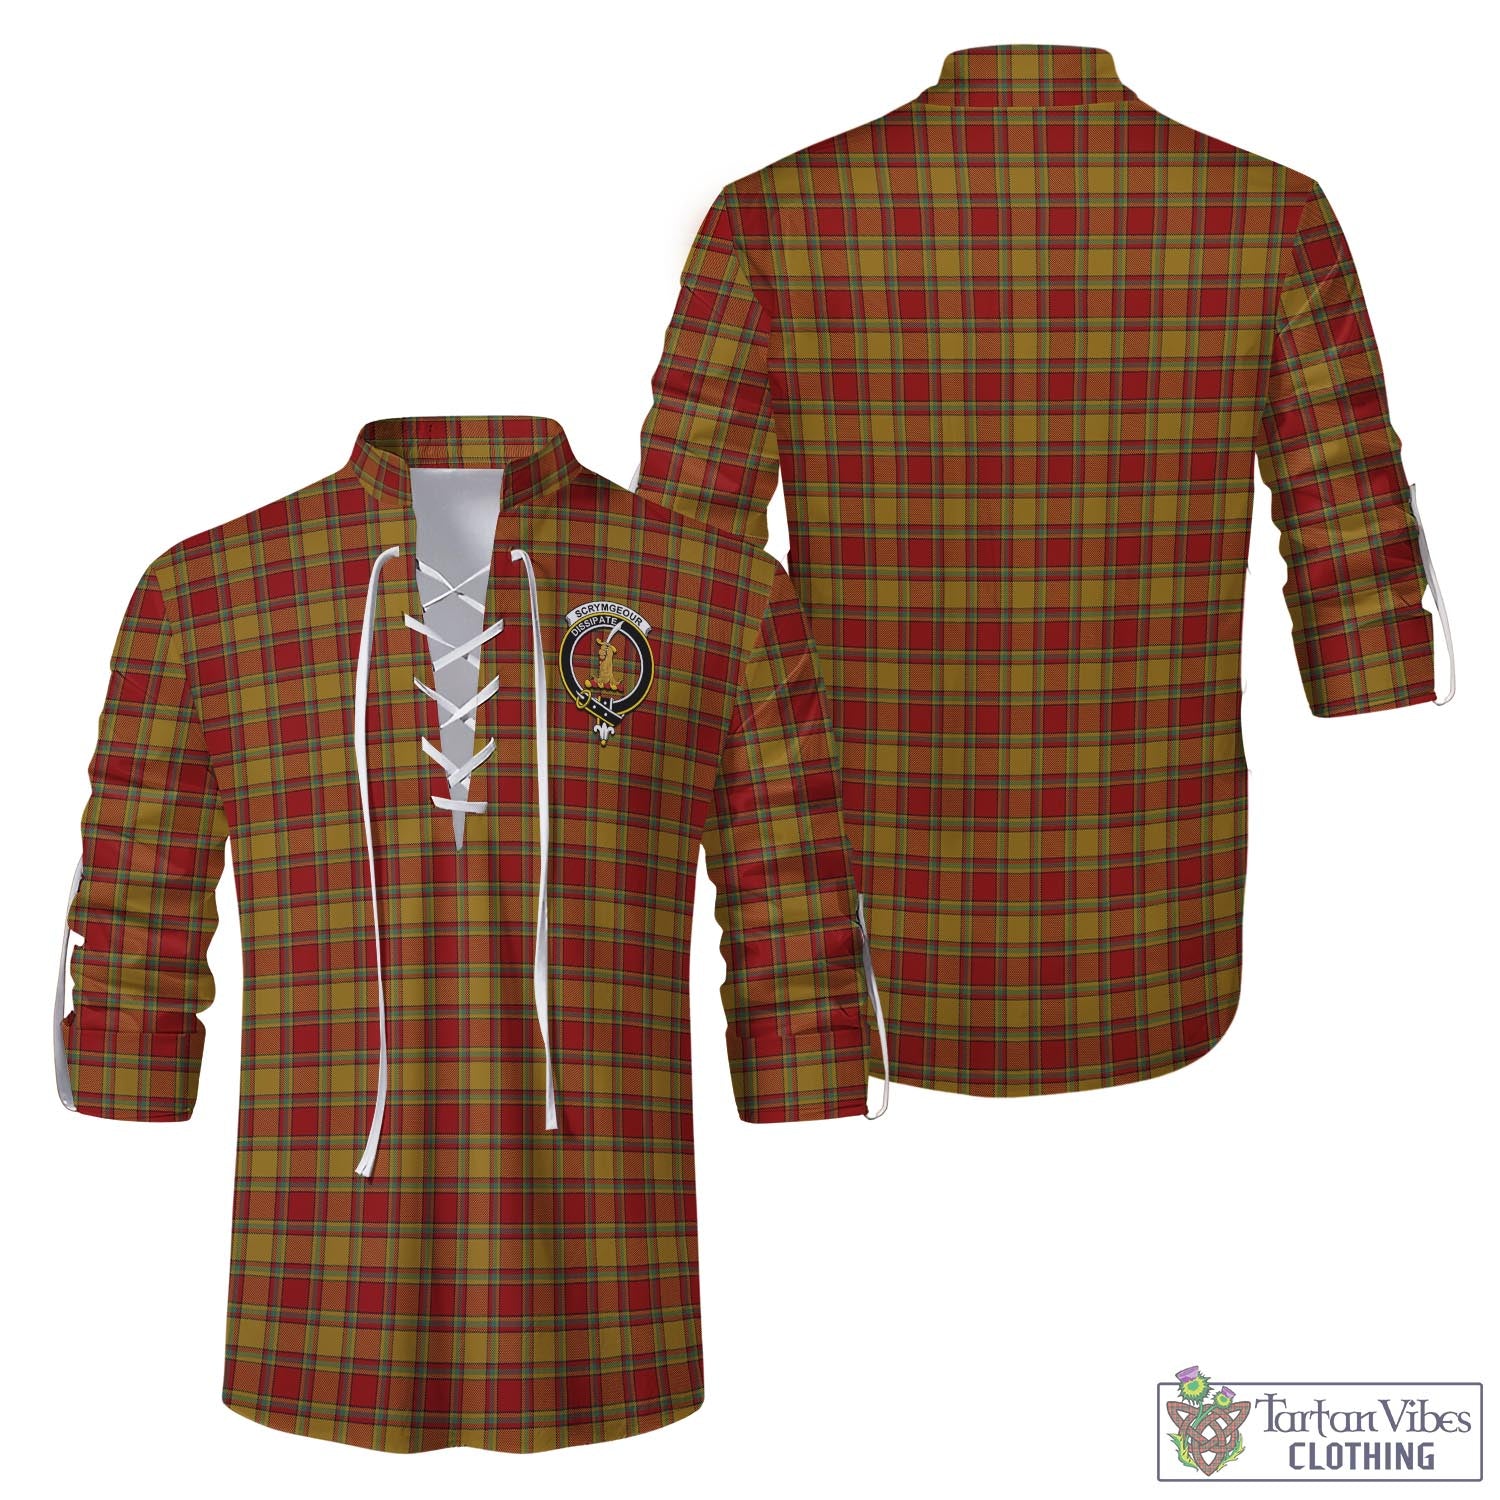 Tartan Vibes Clothing Scrymgeour Tartan Men's Scottish Traditional Jacobite Ghillie Kilt Shirt with Family Crest